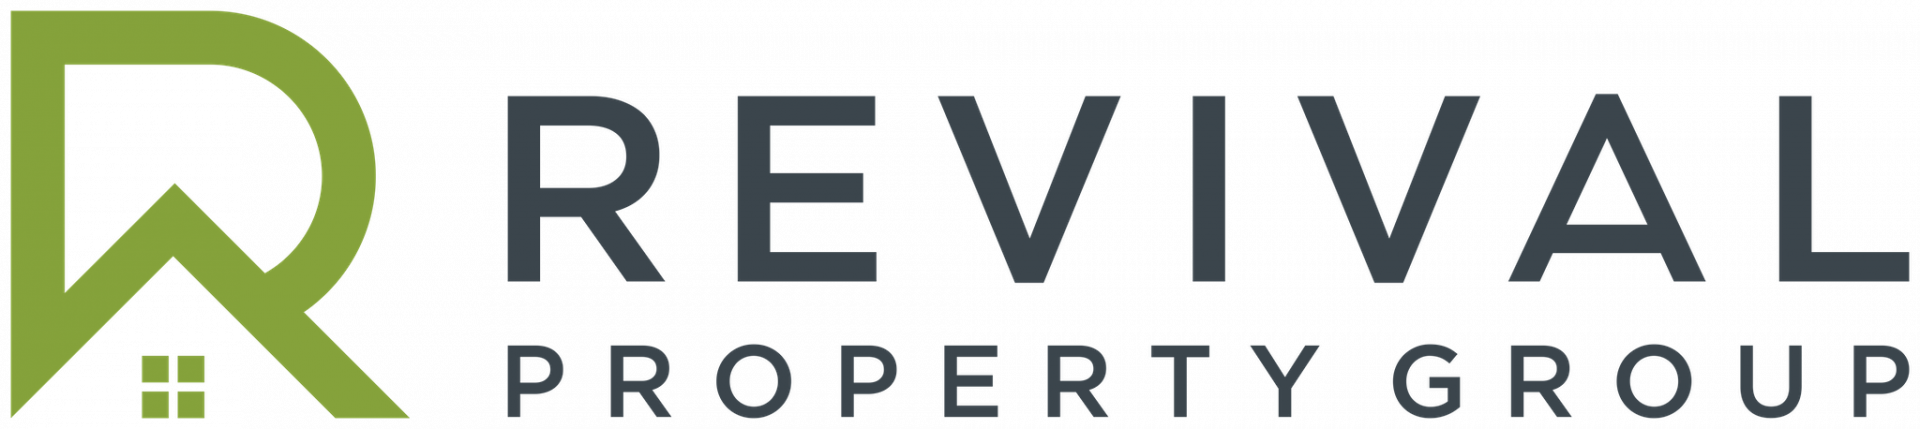 Revival Property Group, Minnesota logo